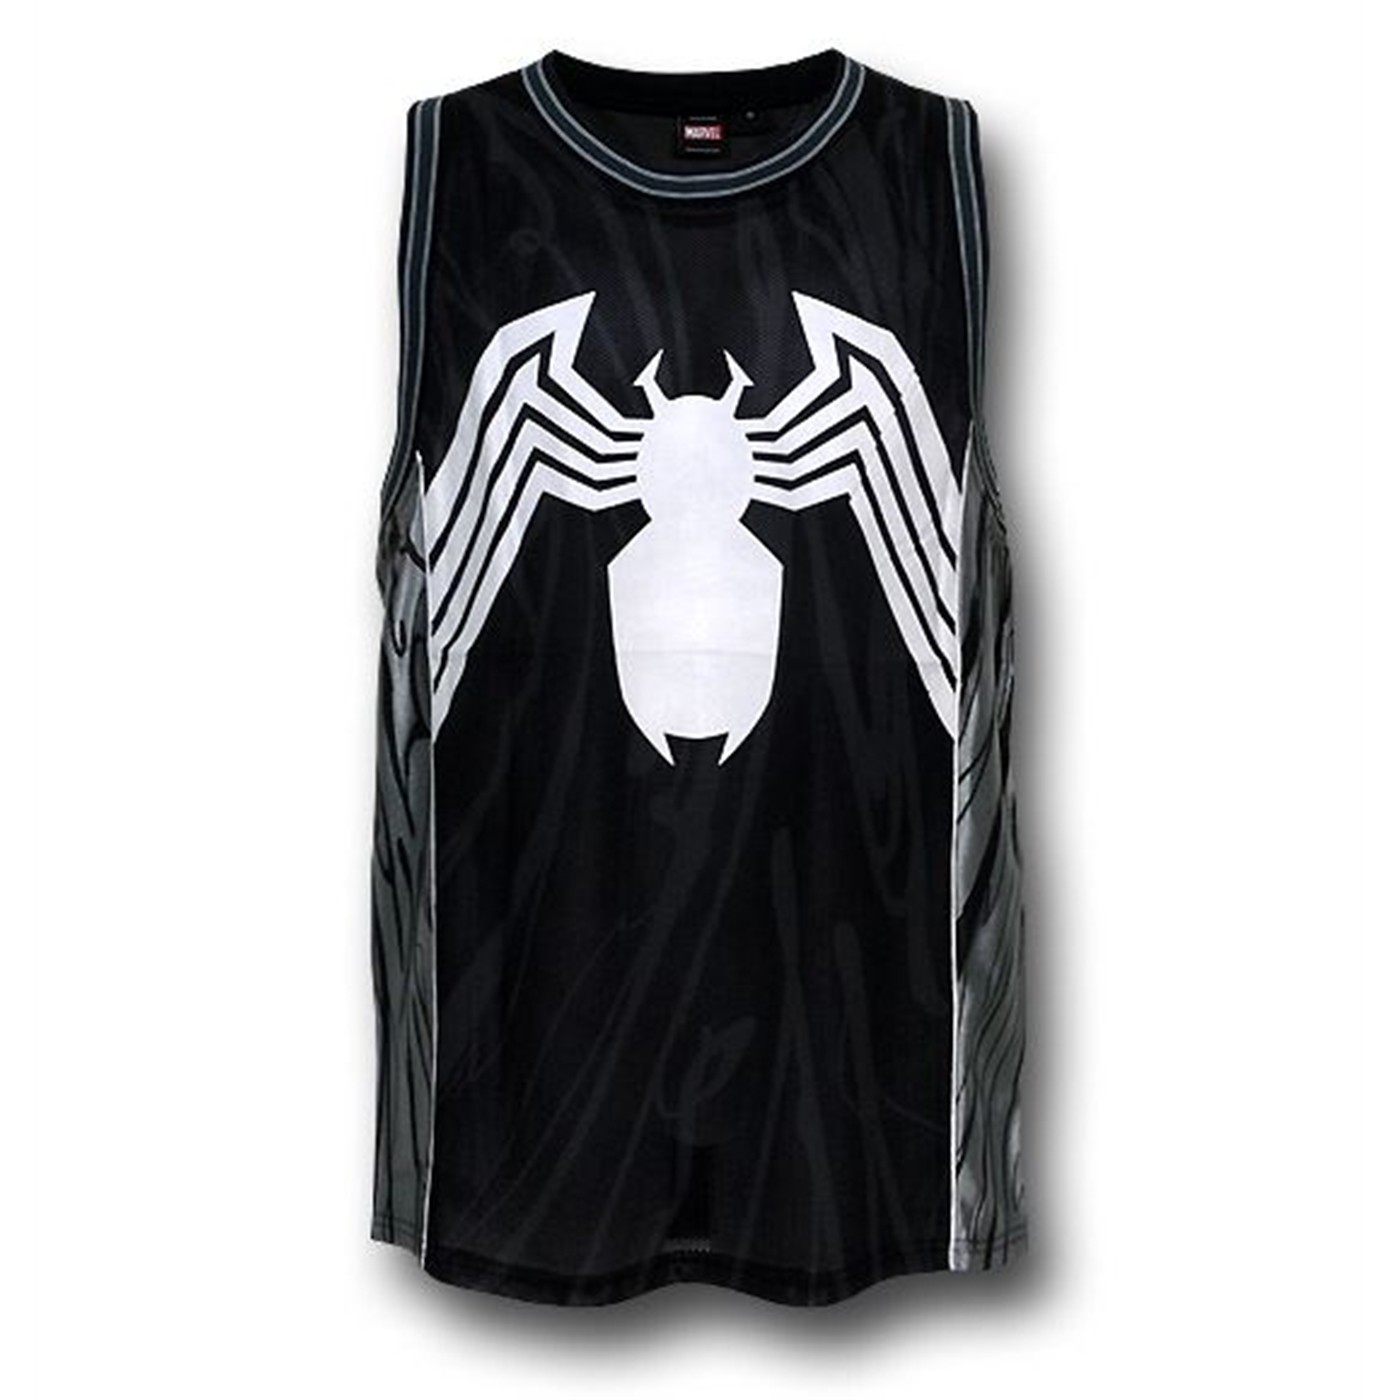 Sublimated Basketball Jersey Venom style